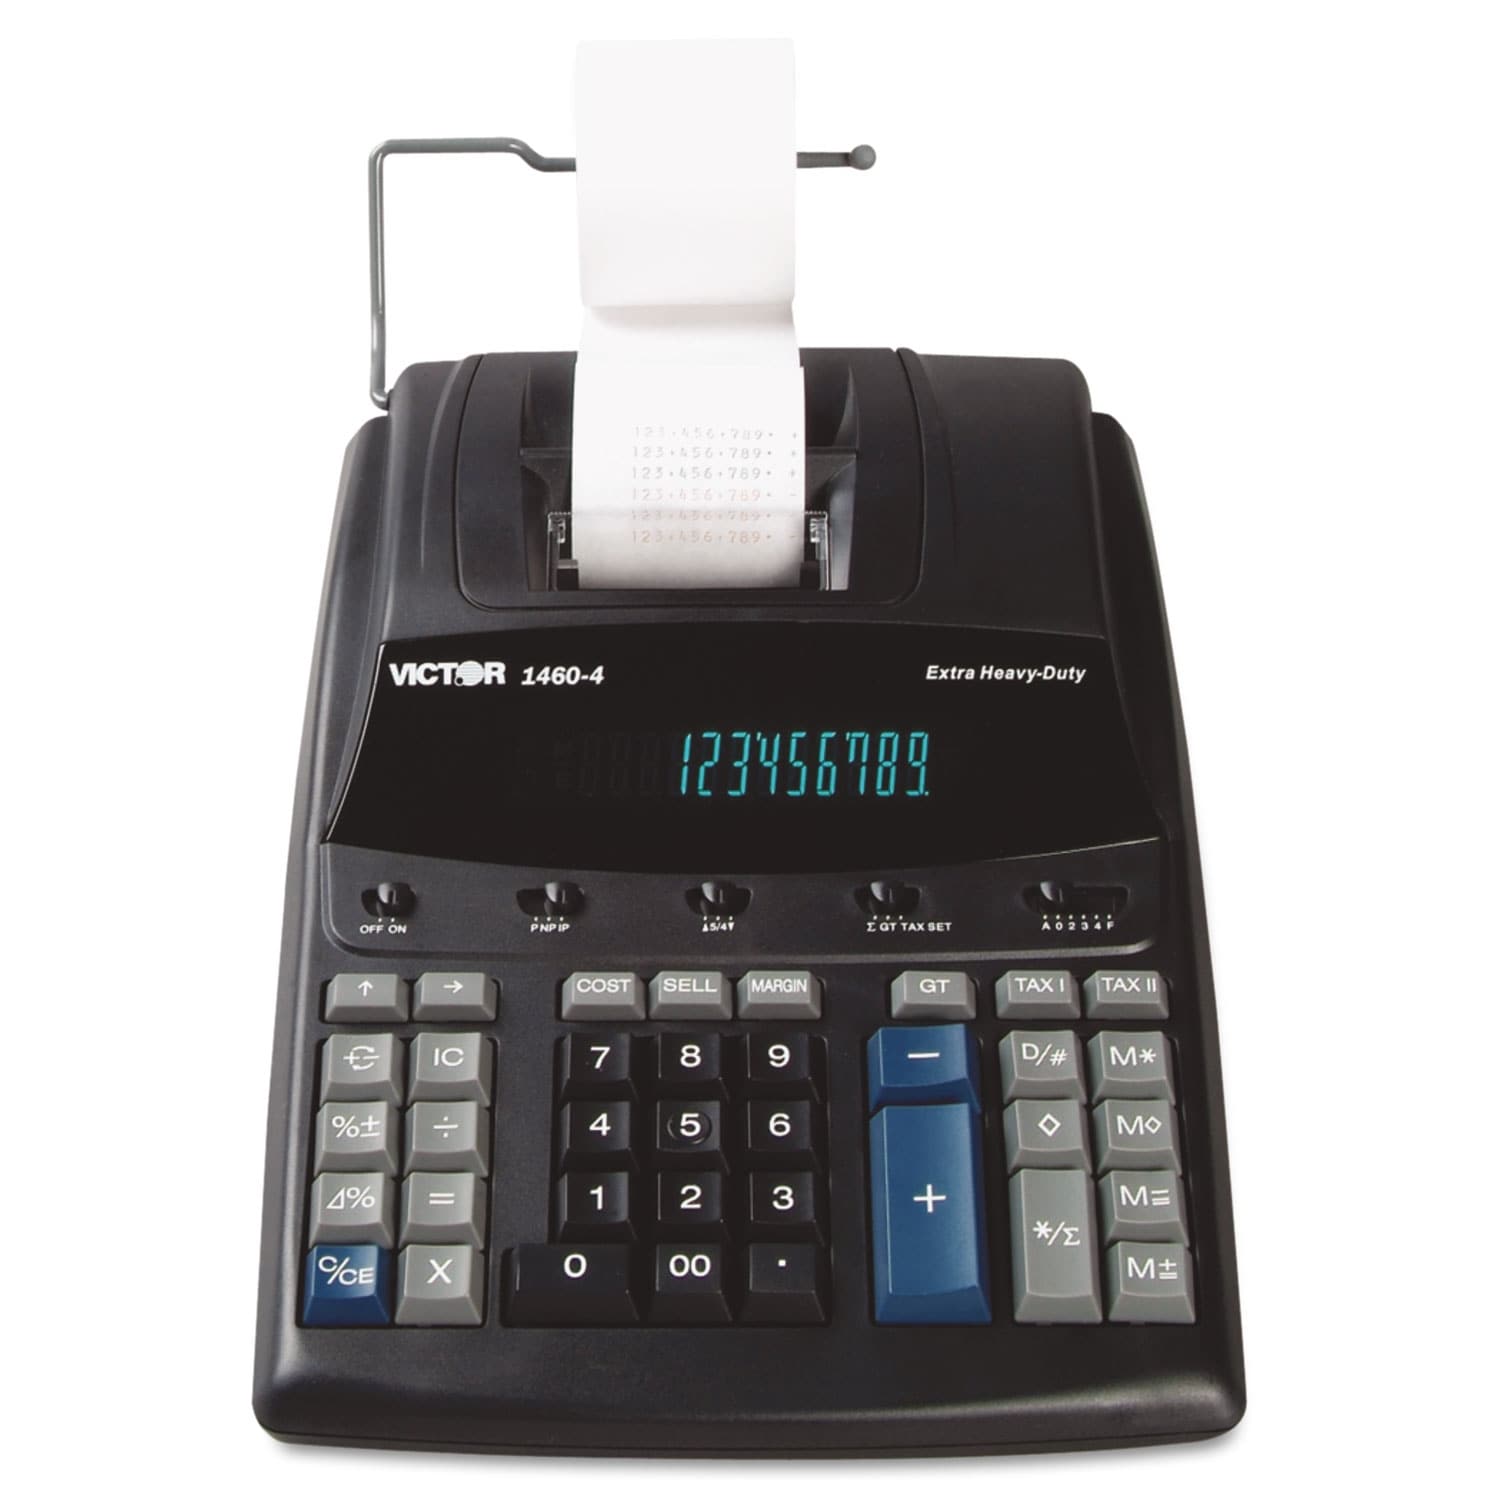 1460-4 Extra Heavy-Duty Printing Calculator, Black...